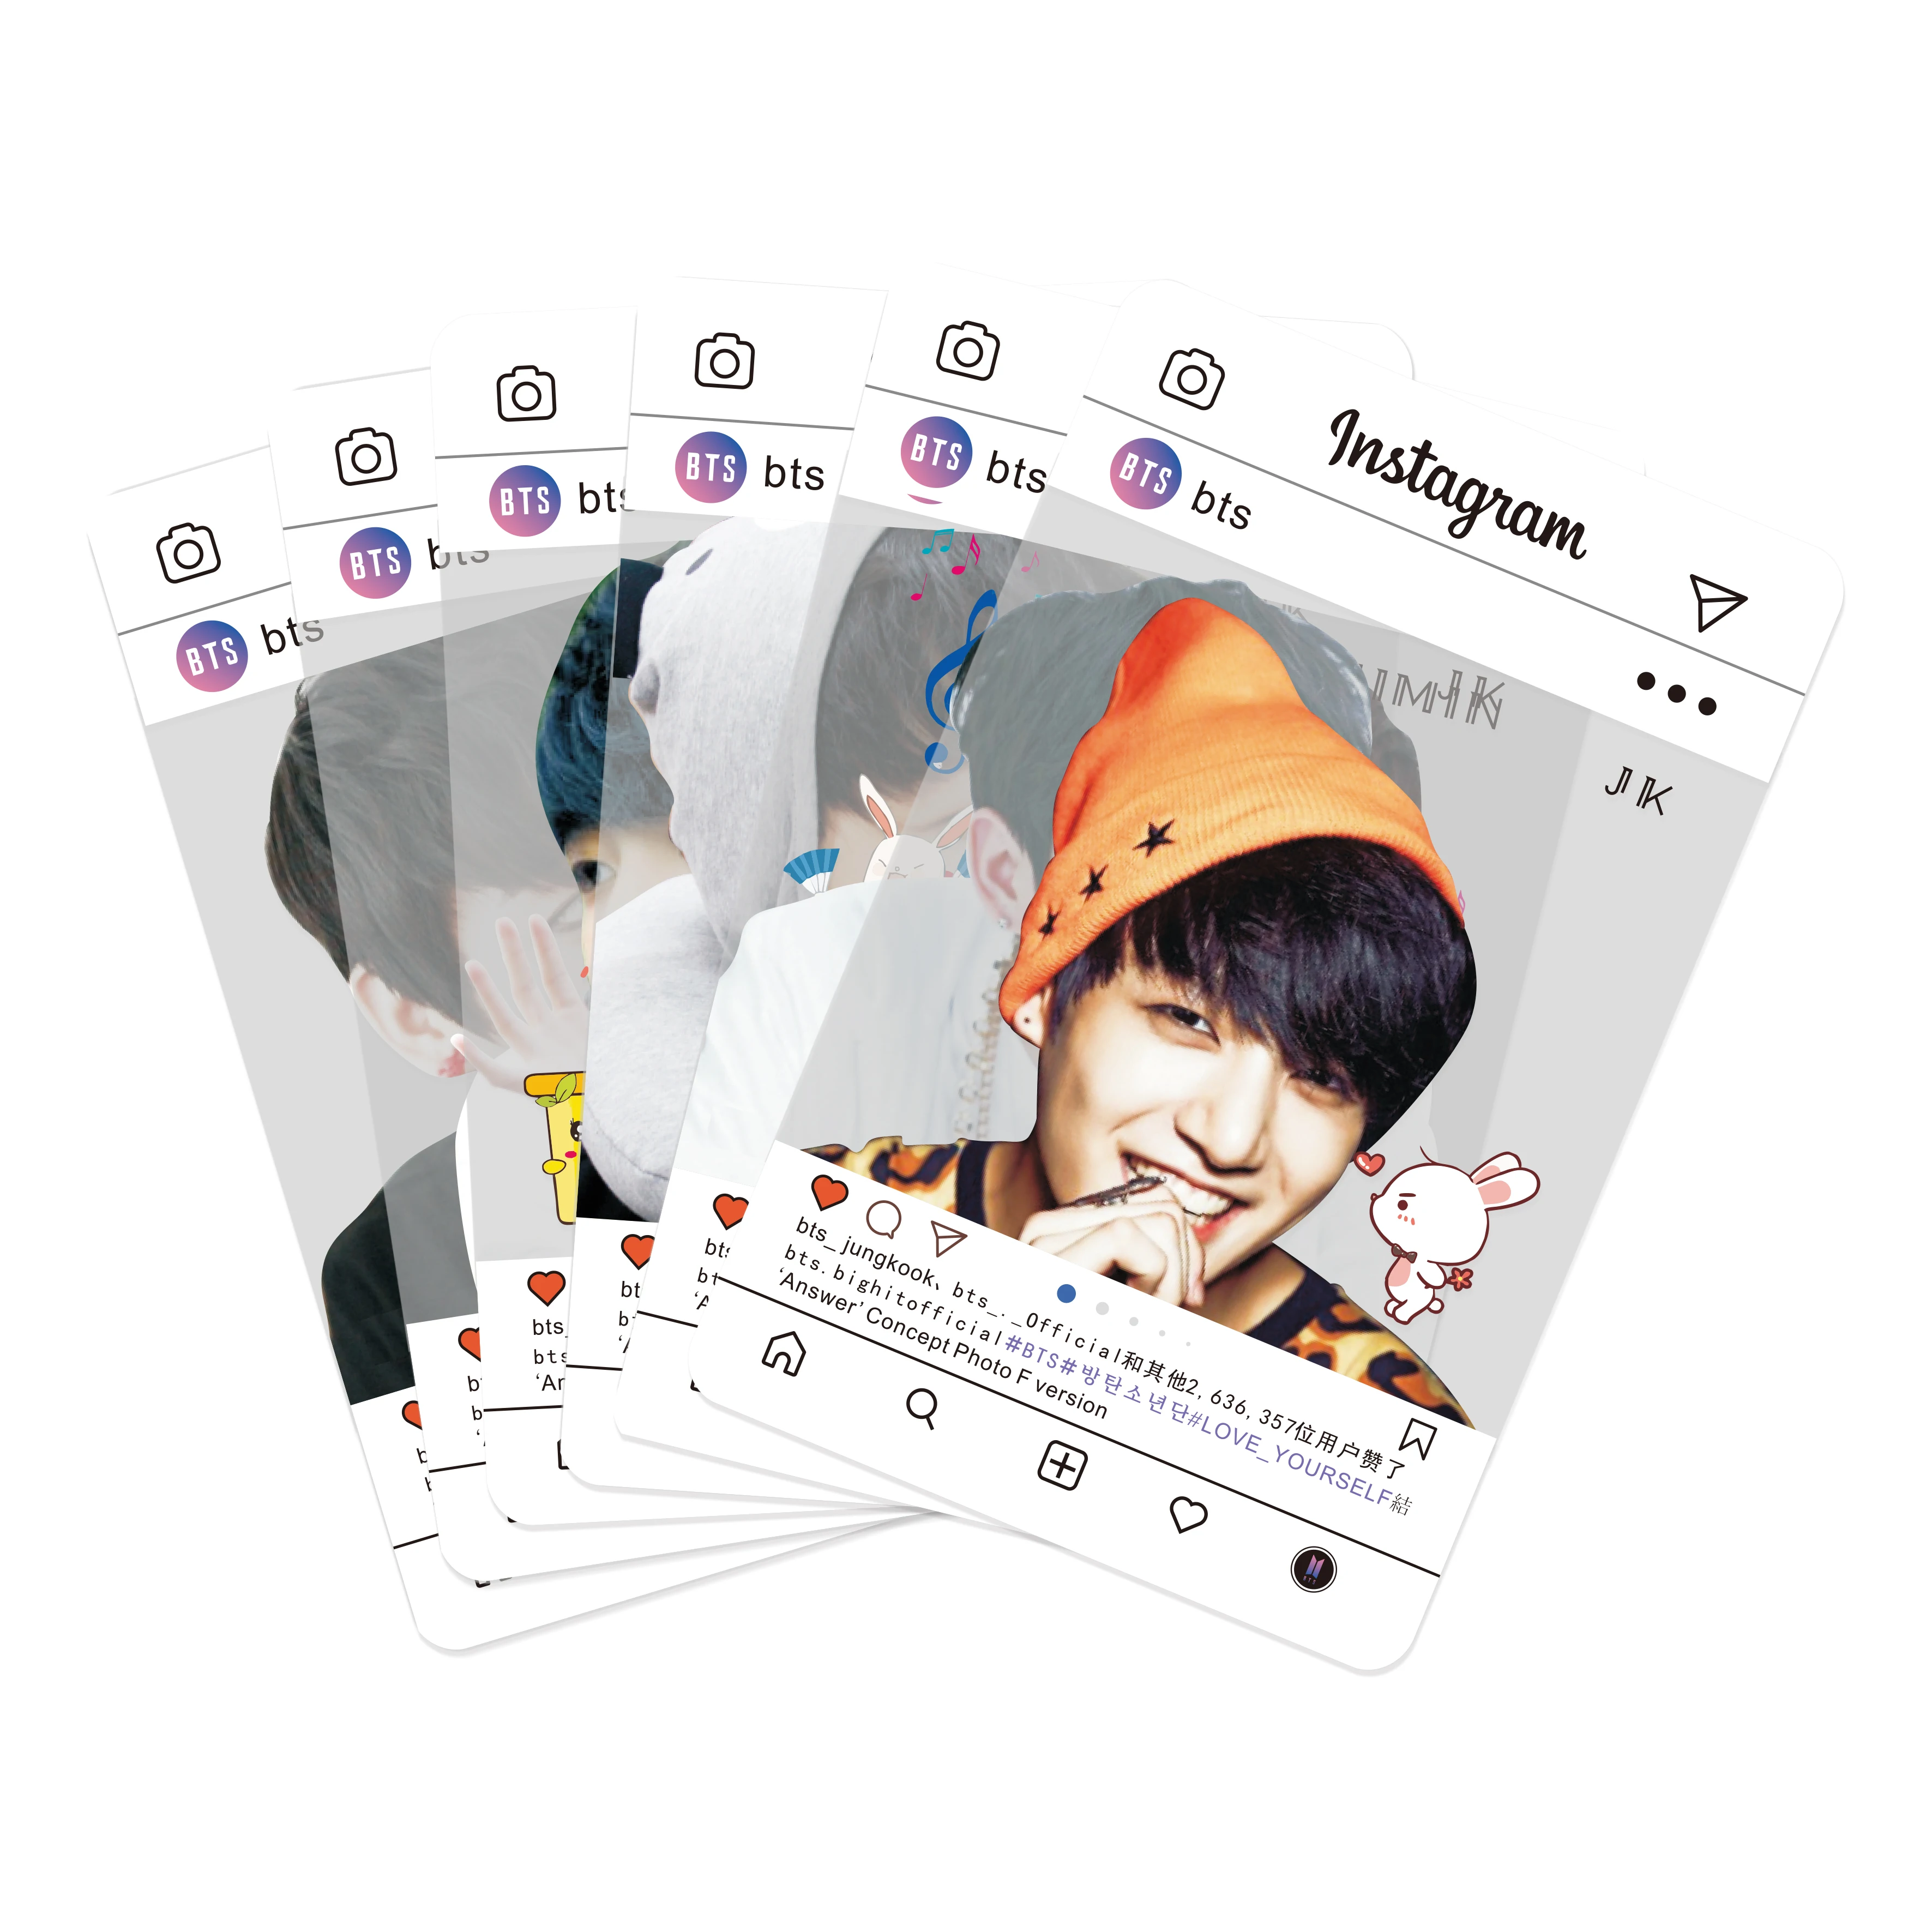 Inkjet printable photo card / hot selling kpop product